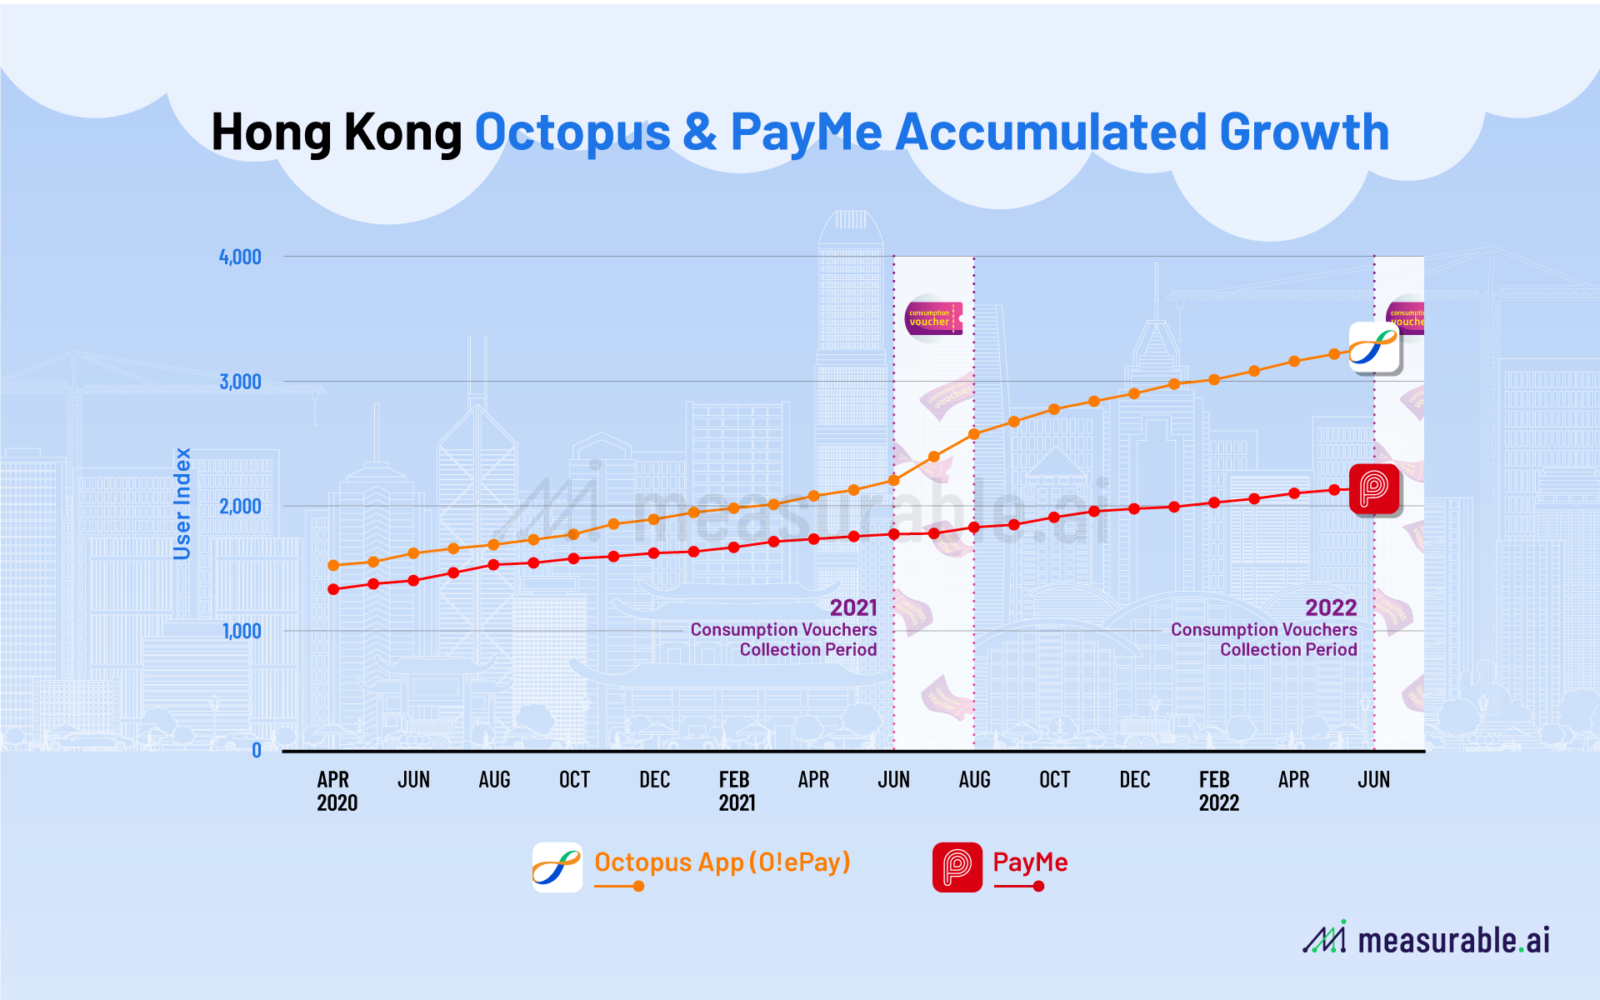 Hong Kong Octopus & PayMe Accumulated Growth